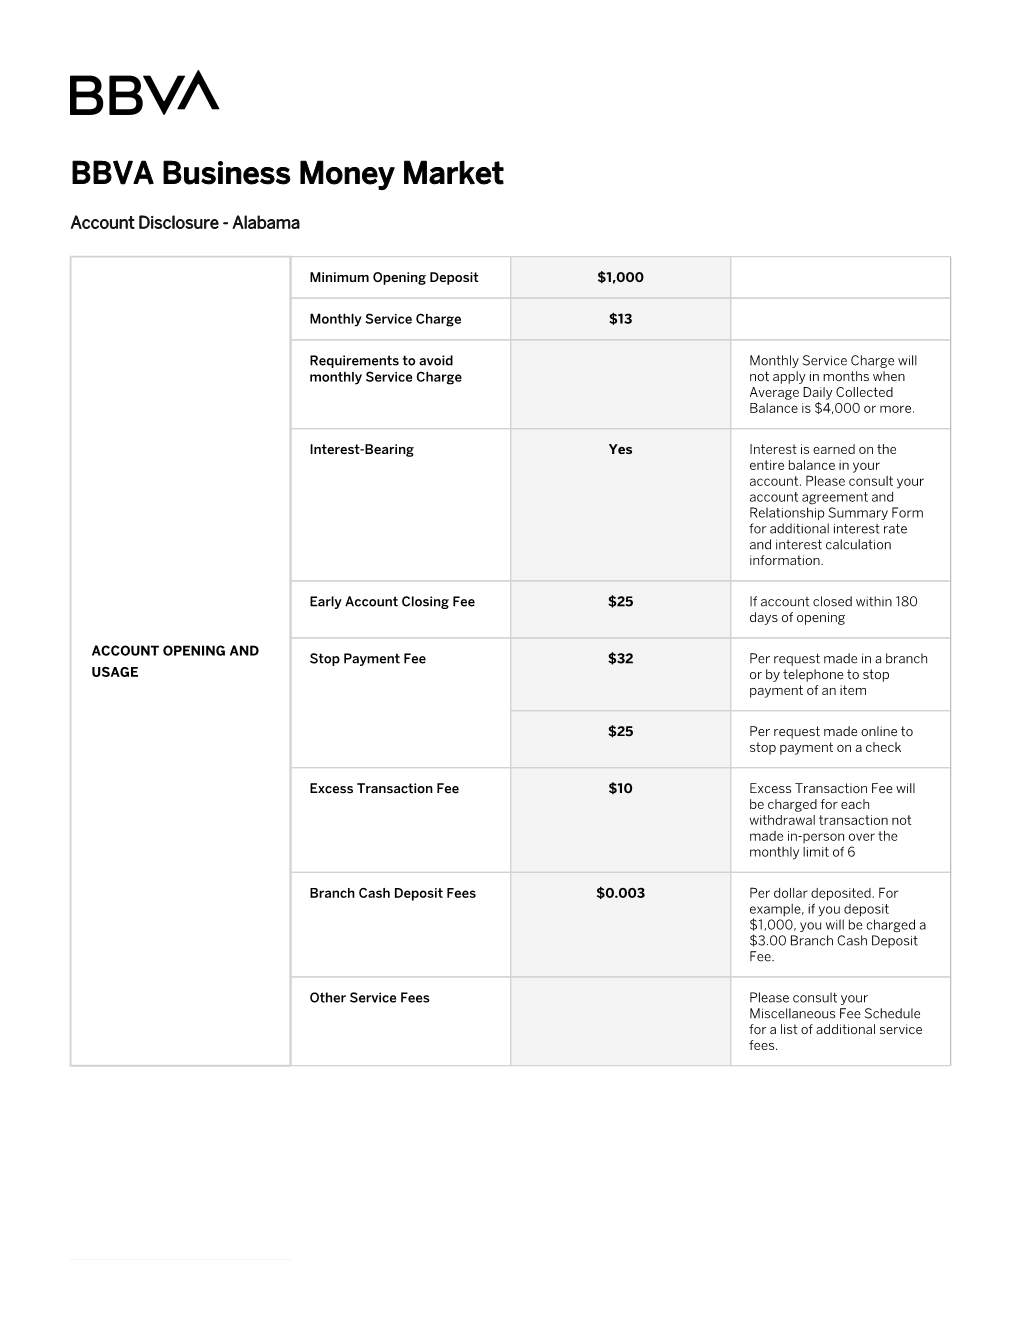 BBVA Business Money Market Account Disclosure | Alabama